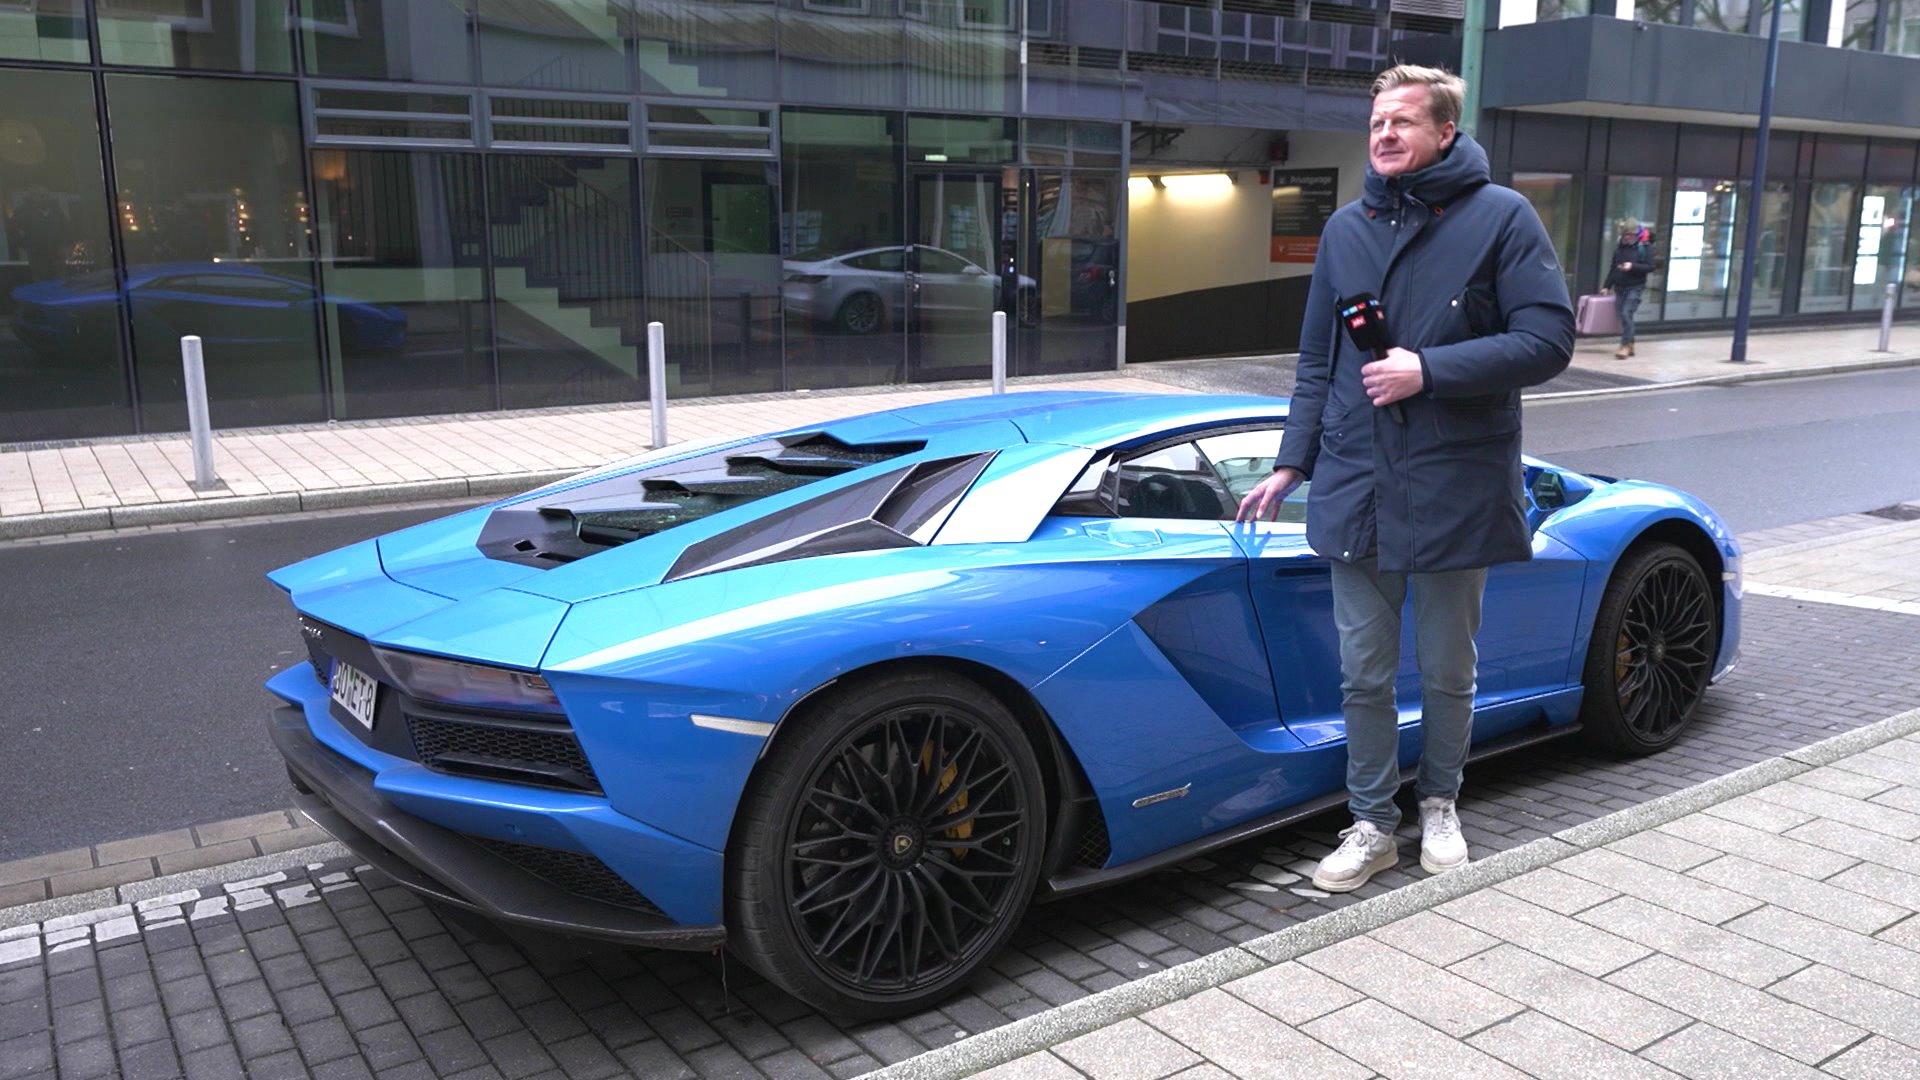 RTL-Reporter macht den Lamborghini-Check Bauer sucht Frau: Luxusauto als Dating-Booster?